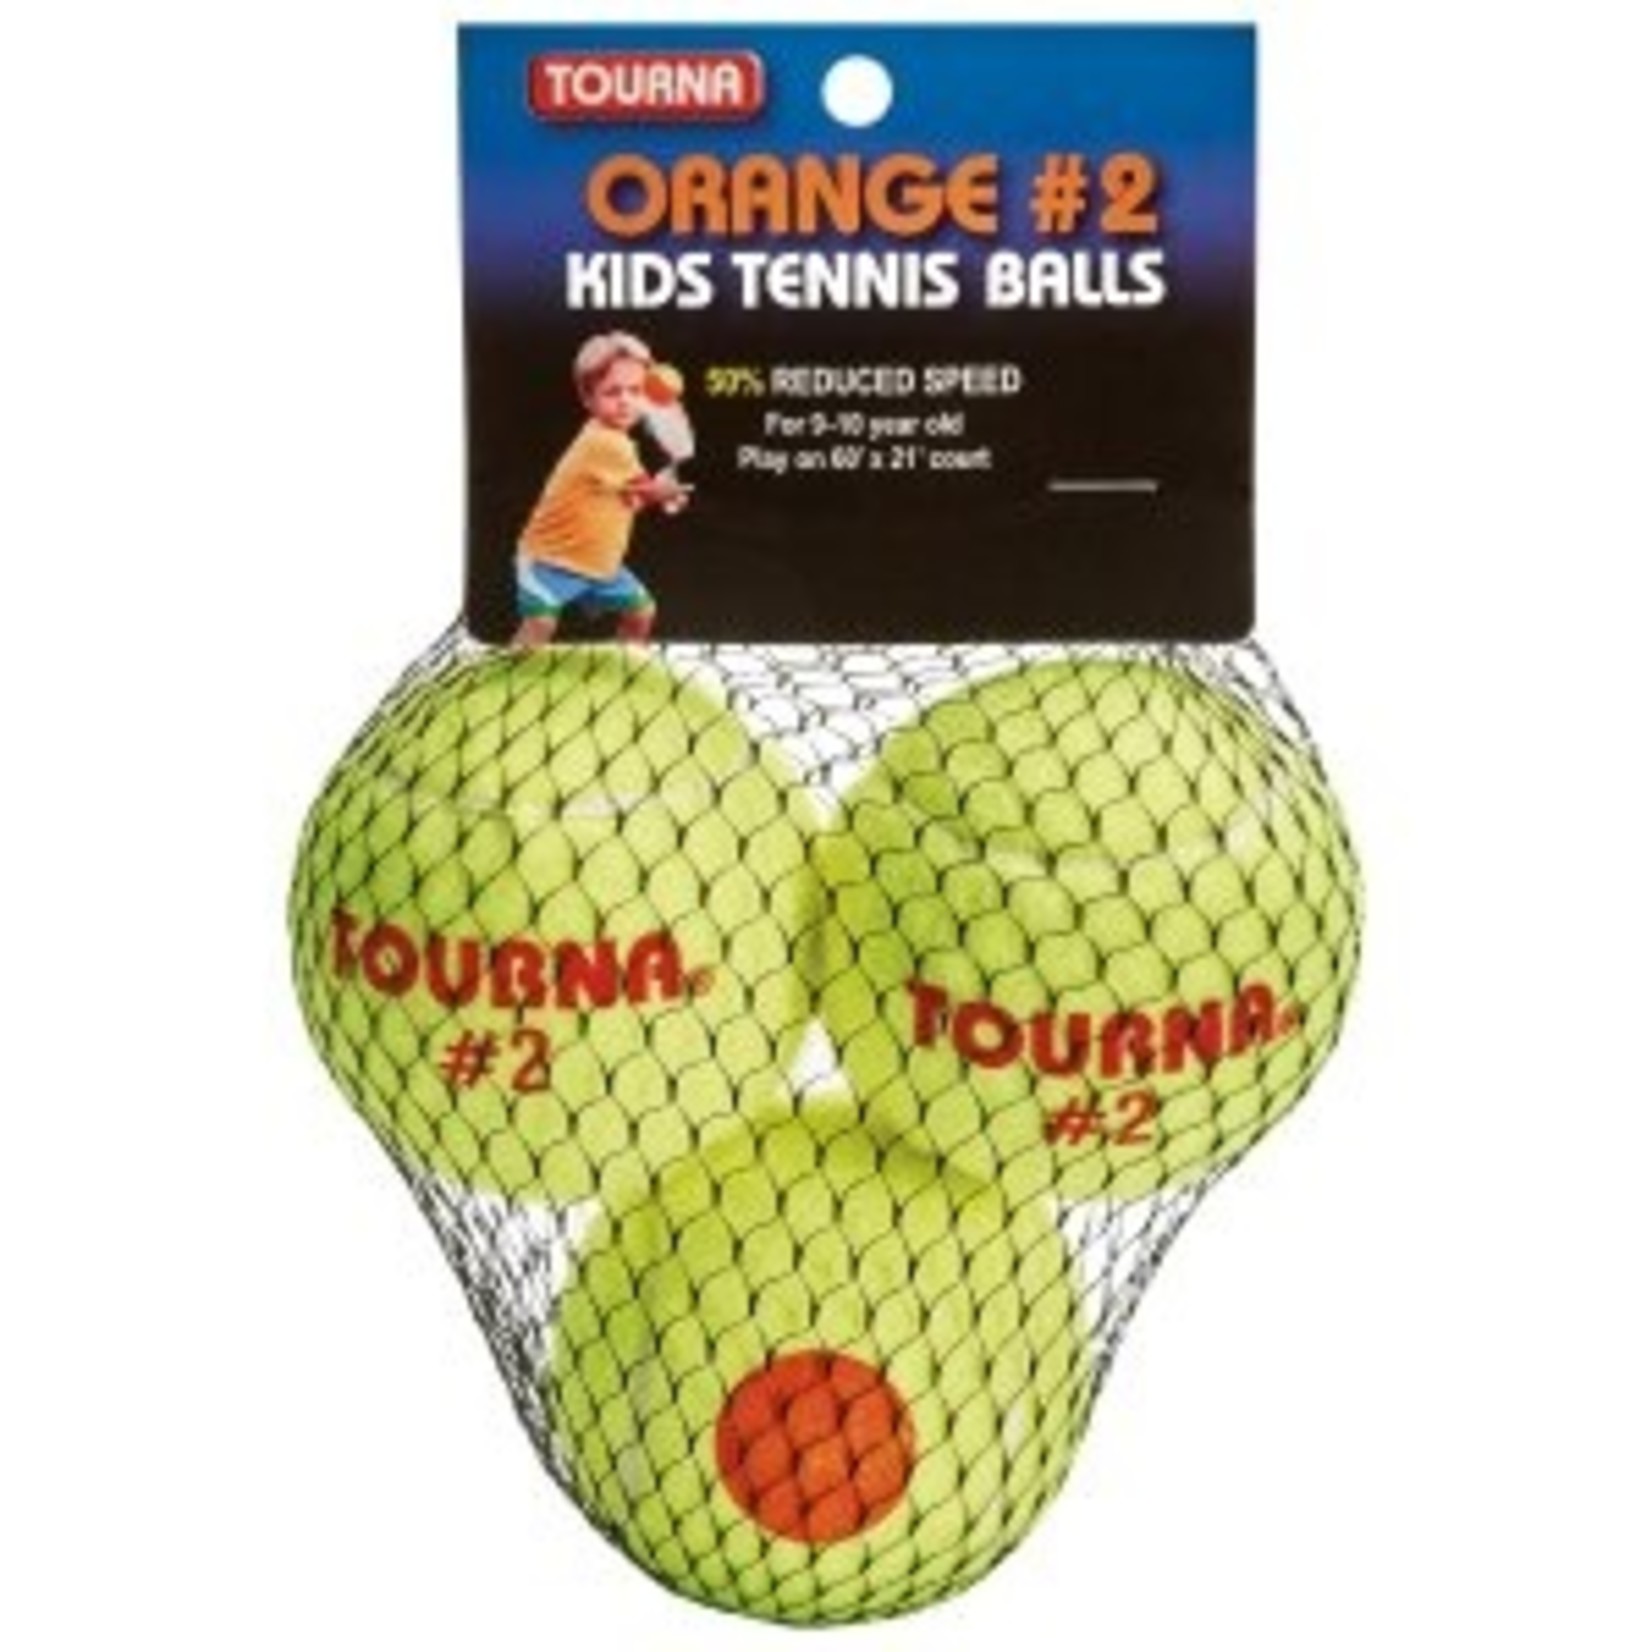 Tourna Orange Ball 50% Reduced Speed